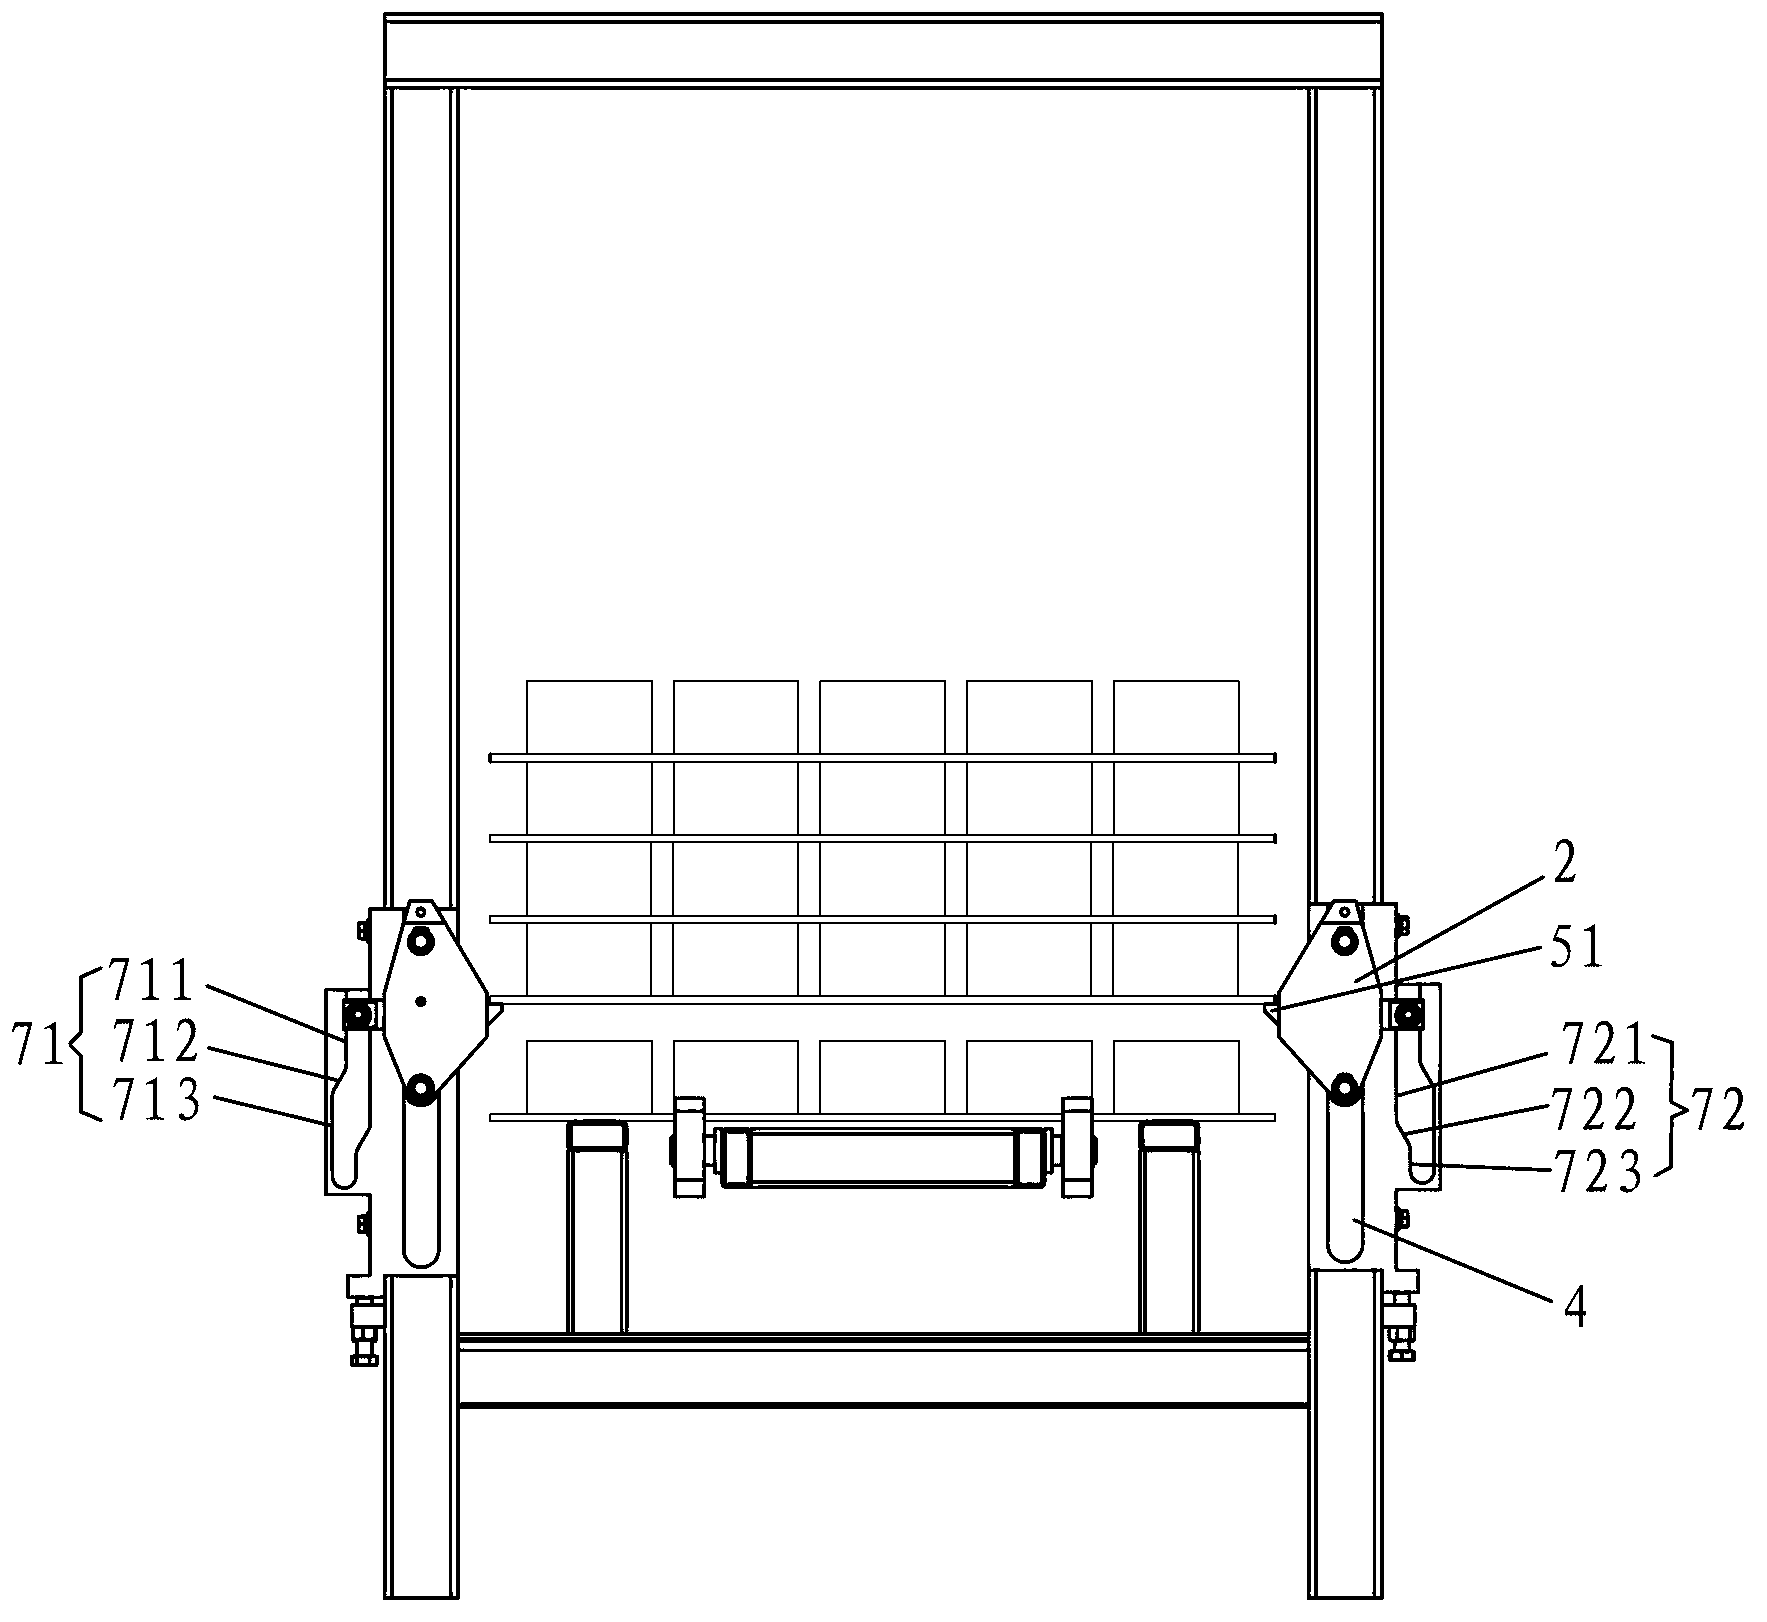 Plate splitting device